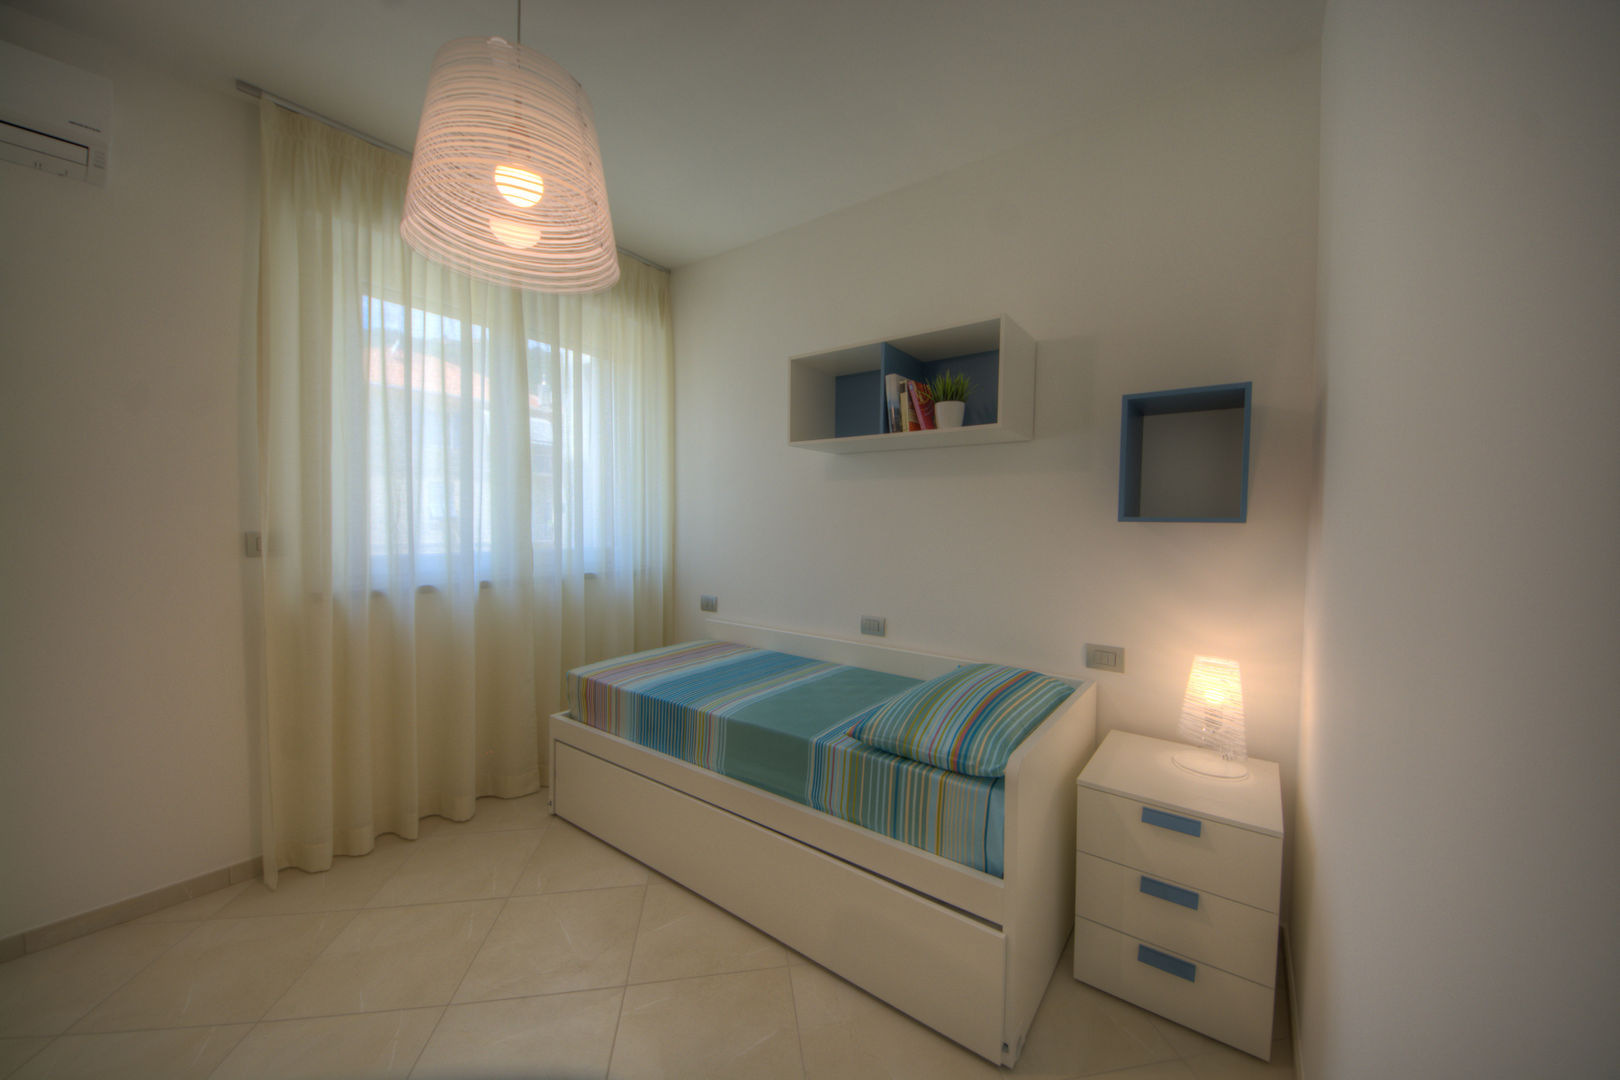 Appartamenti per locazione, Lella Badano Homestager Lella Badano Homestager Modern Yatak Odası Yataklar & Yatak Başları